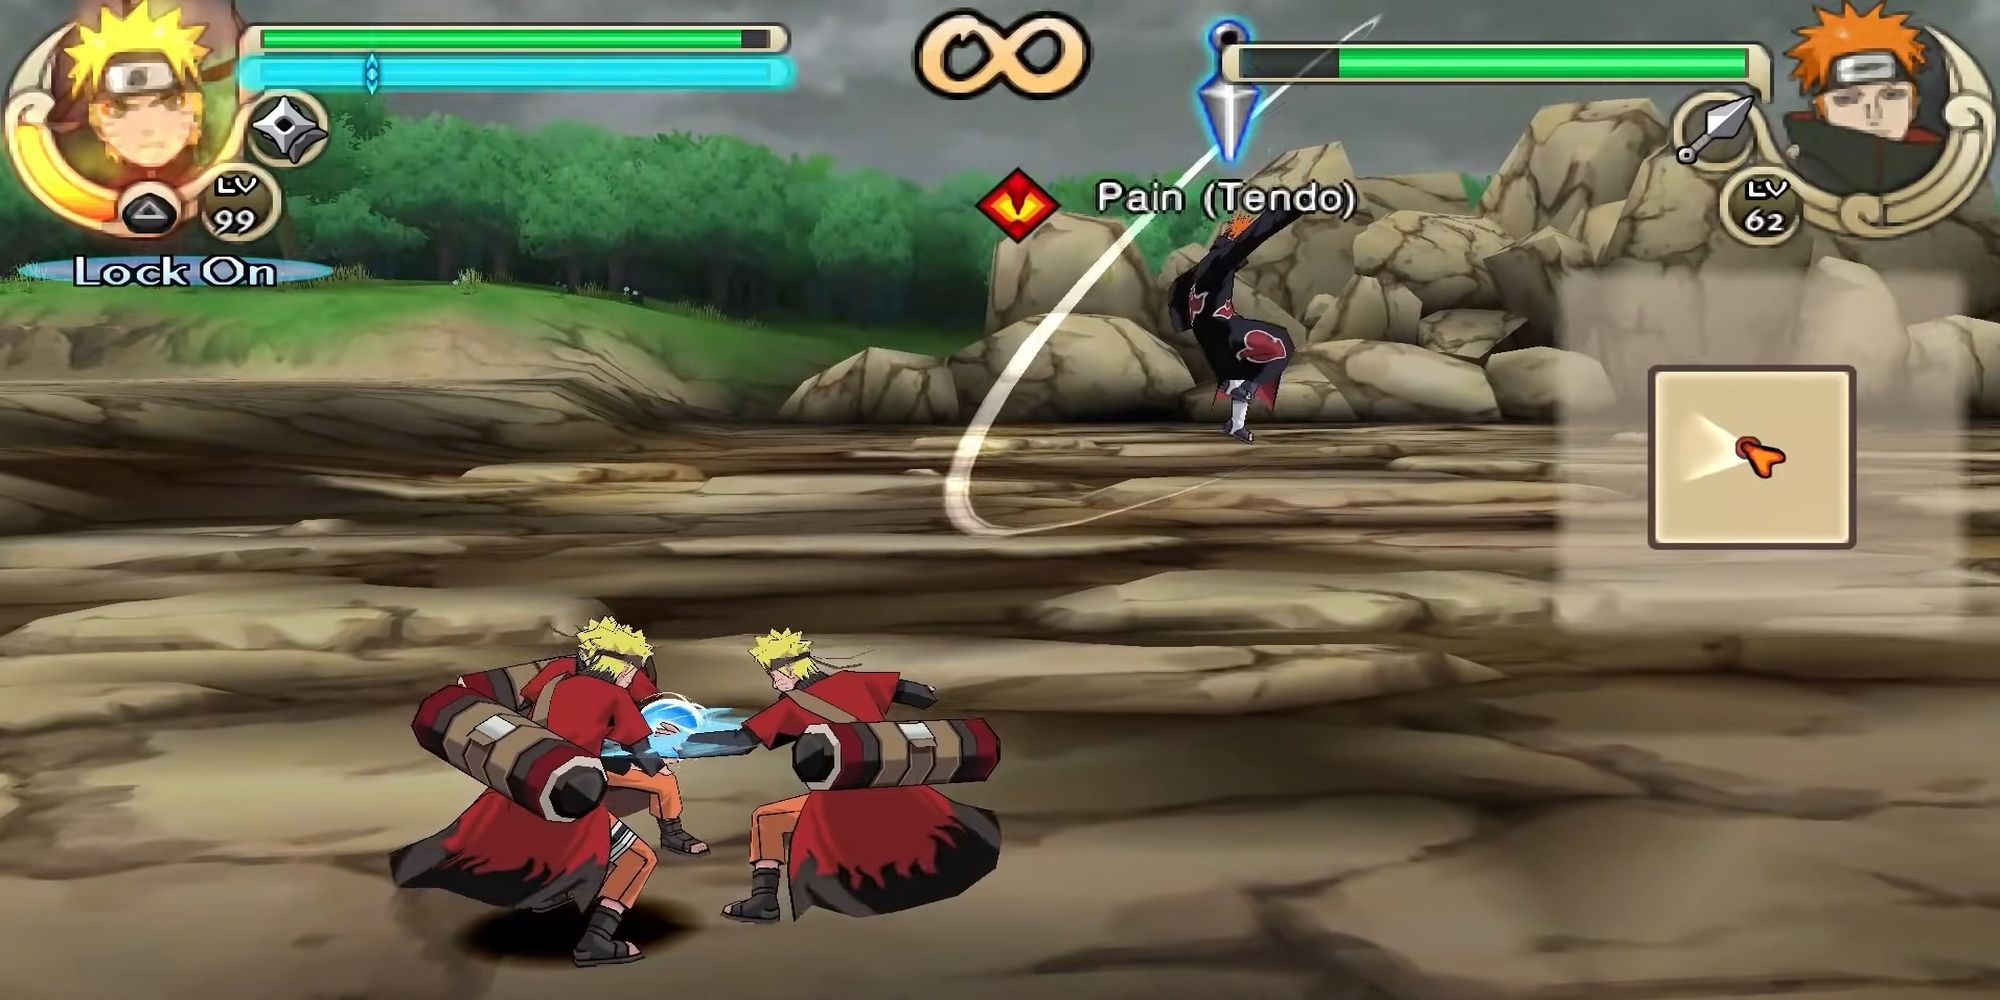 Naruto preparing a shuriken rasengan against Pain.